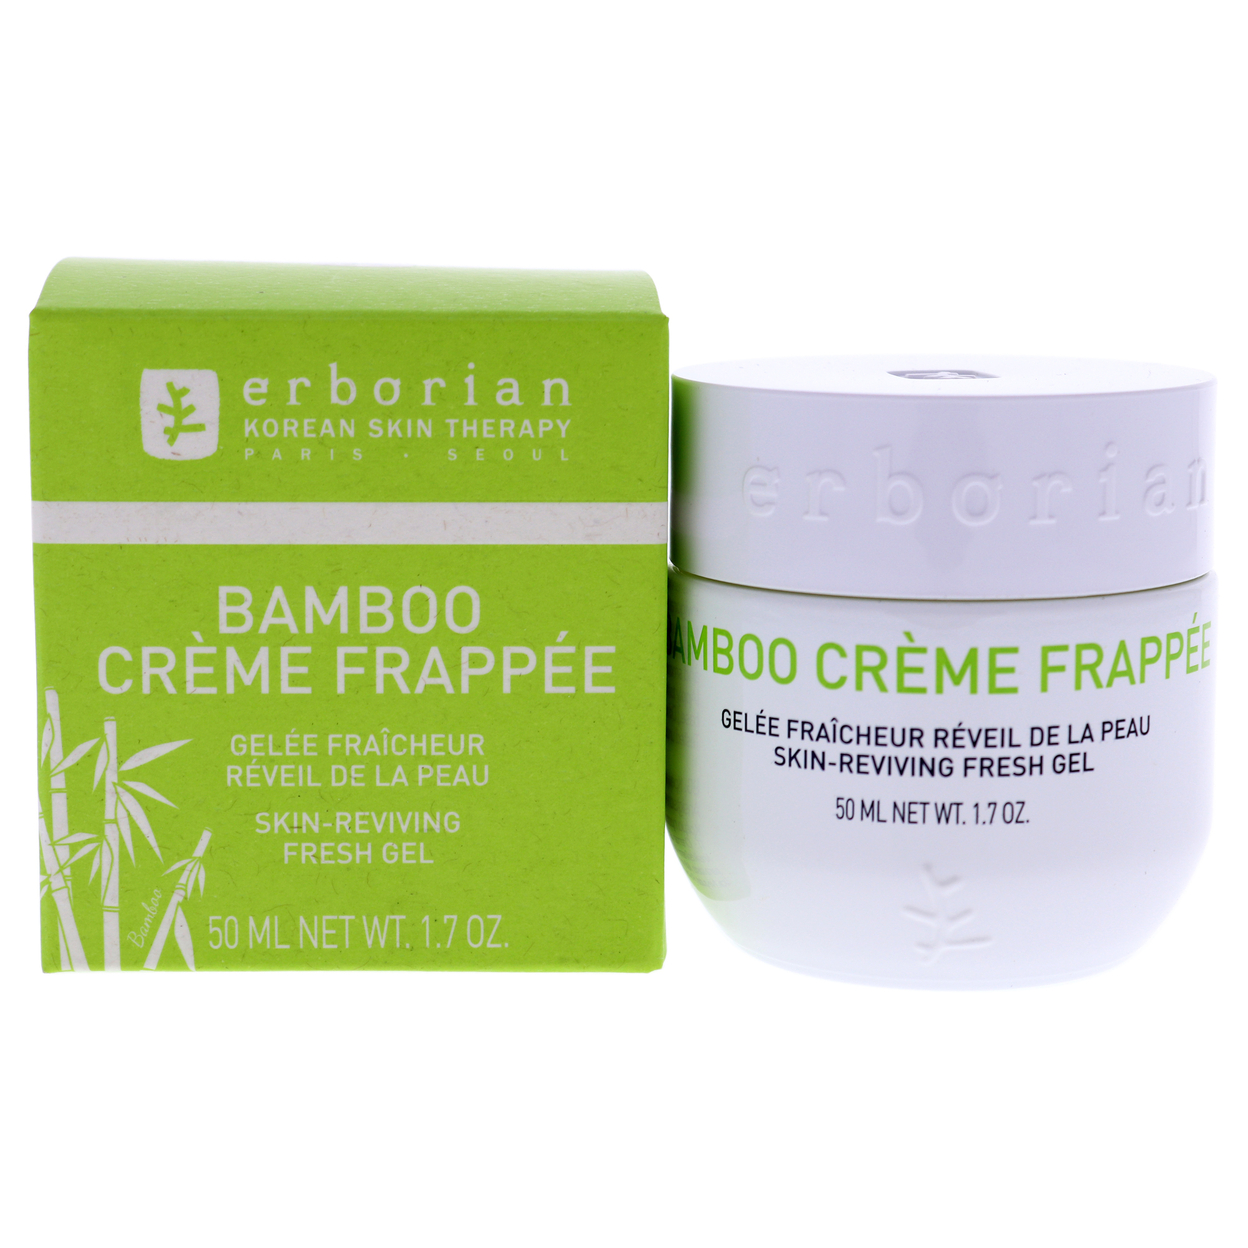 Erborian Bamboo Creme Frappee Cream 1.7 Oz